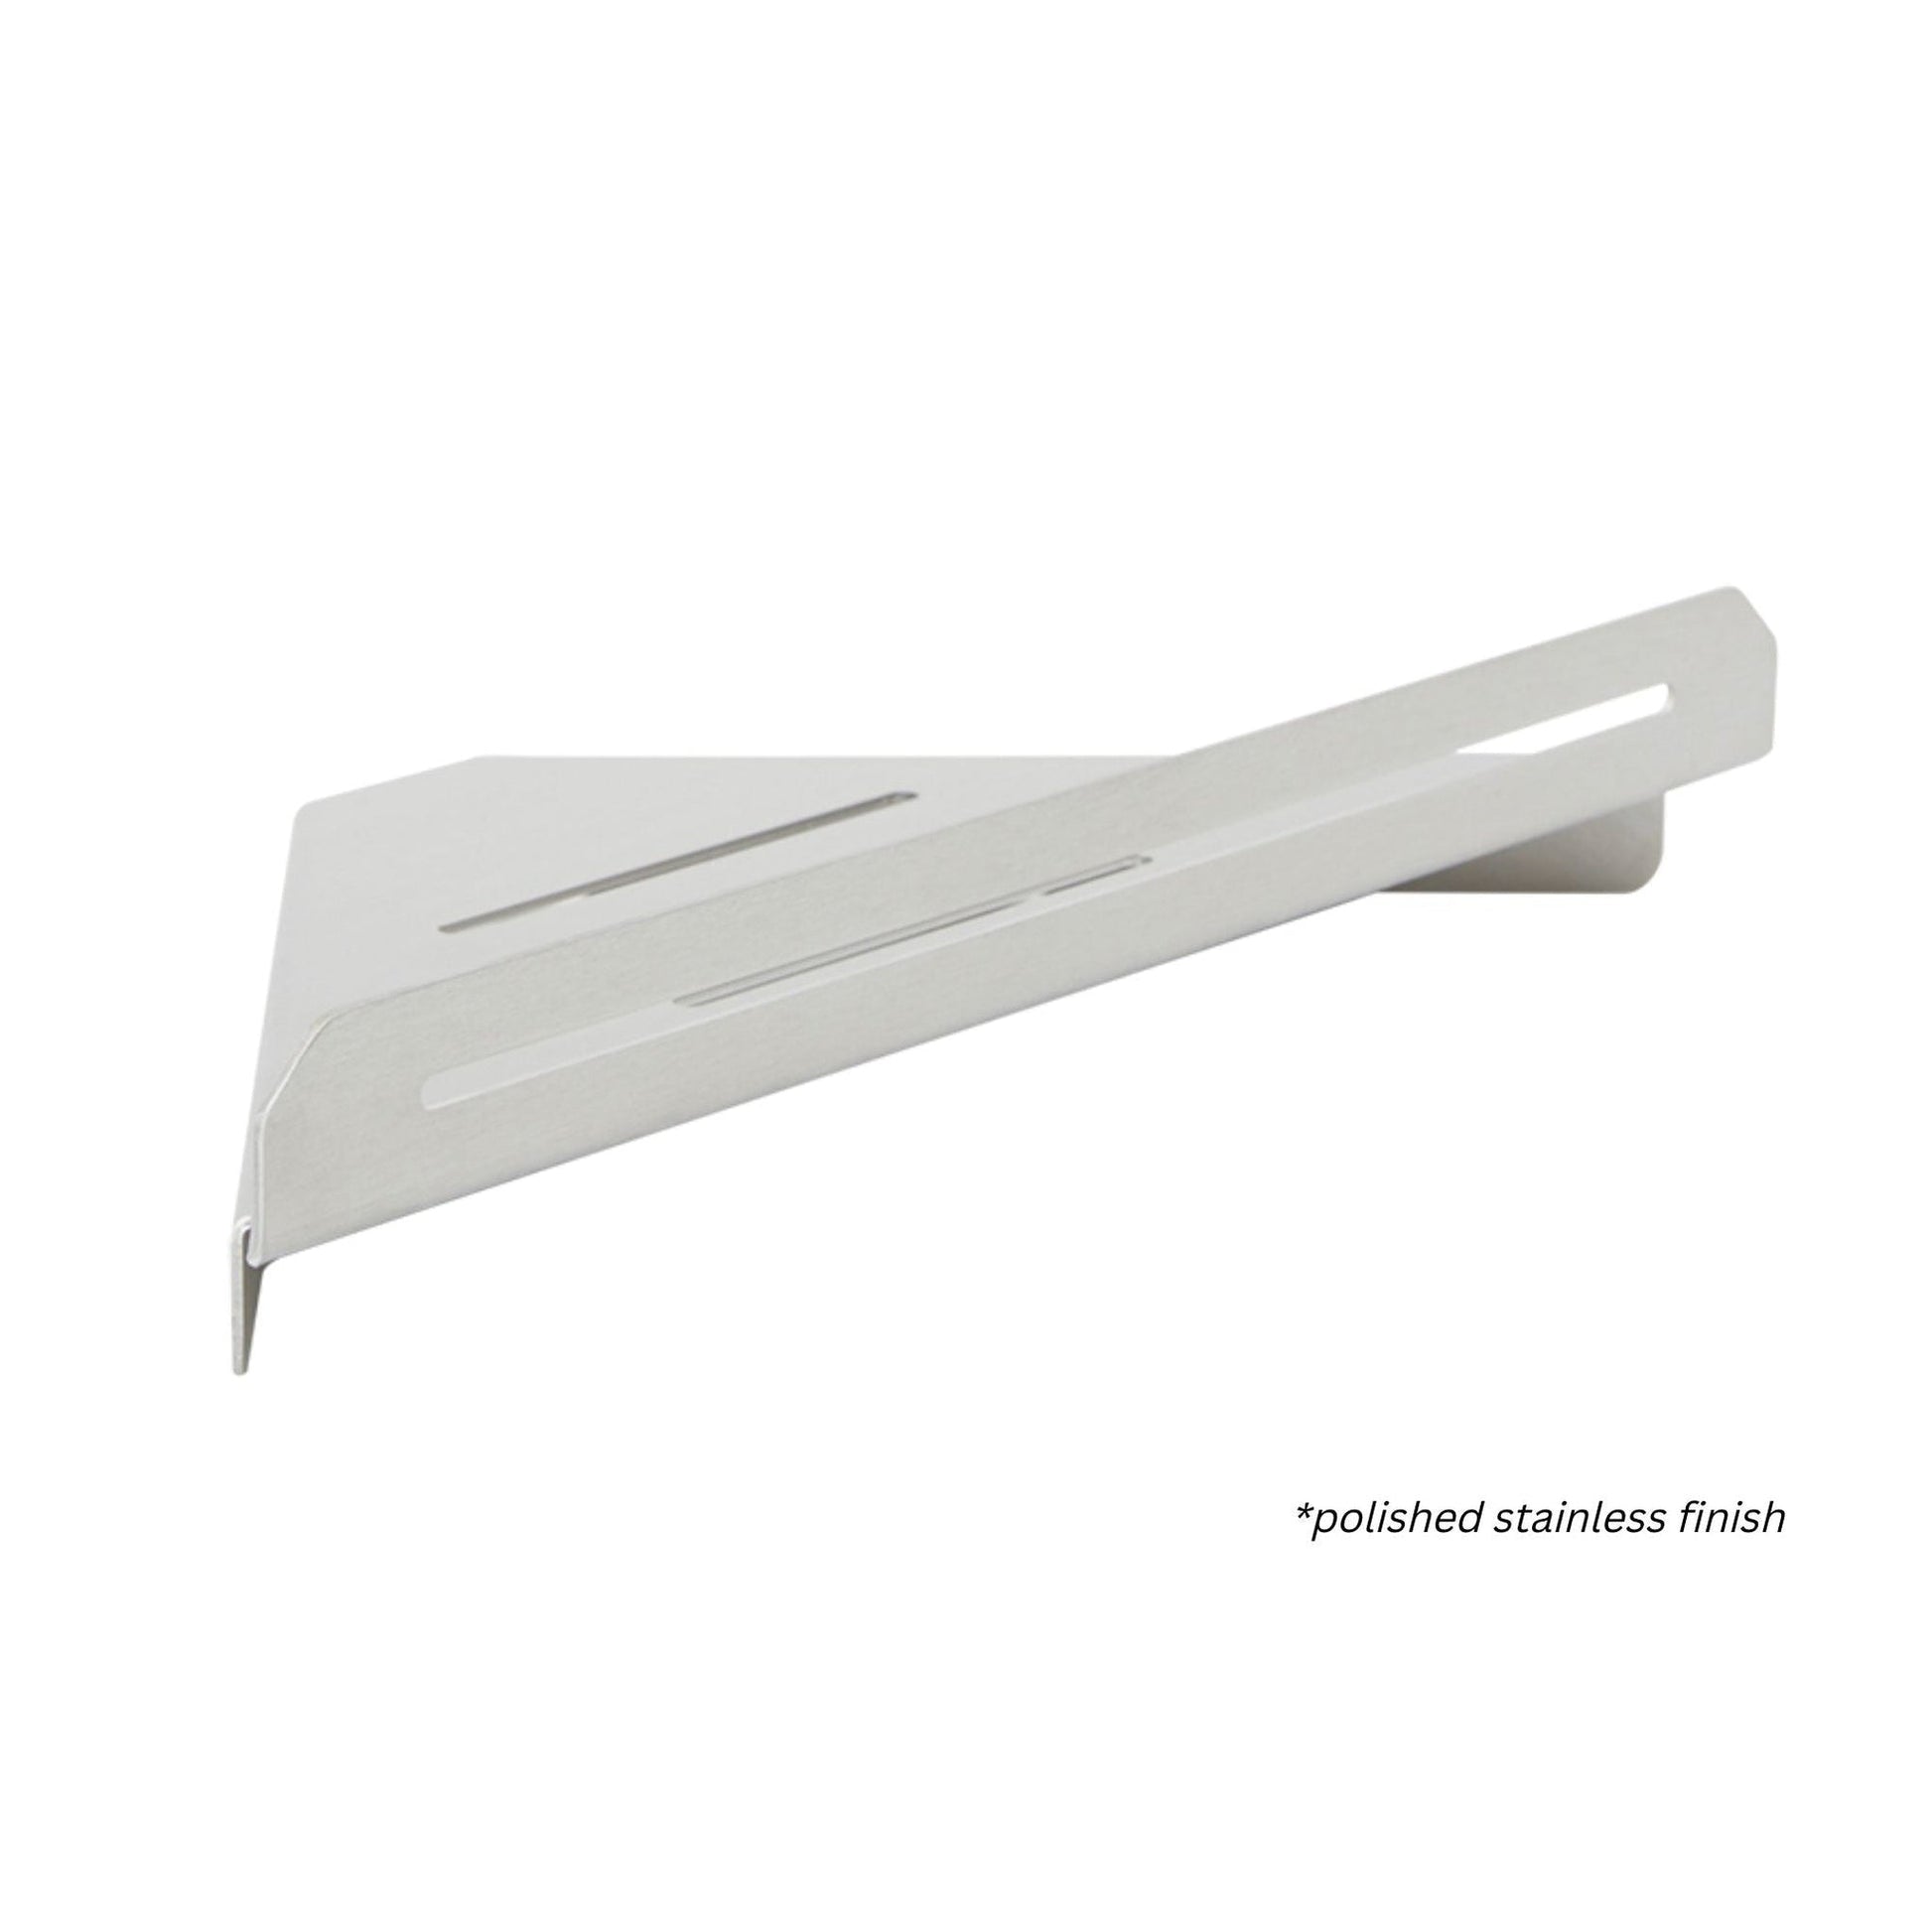 Seachrome Coronado 700 Series 14" x 8" Corner Shower Shelf in White Wrinkle Powder Coated Stainless Finish